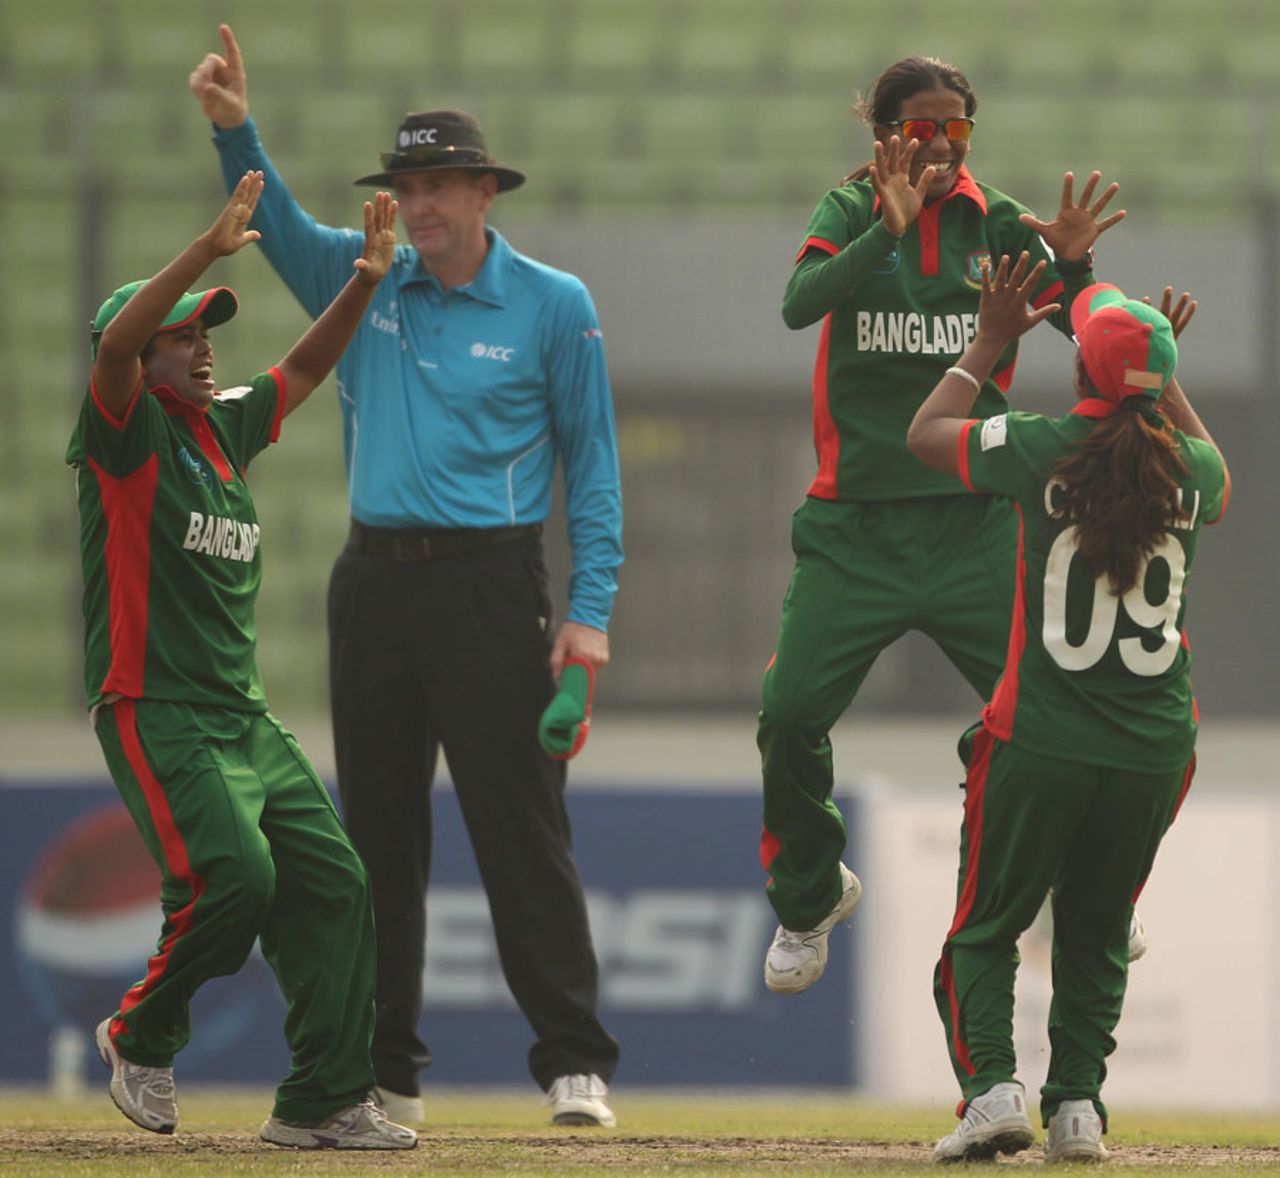 Salma Khatun and her team-mates celebrate Qanita Jalil's dismissal, Bangladesh v Pakistan, Group B match, ICC Women's World Cup Qualifier, Mirpur, November 14, 2011